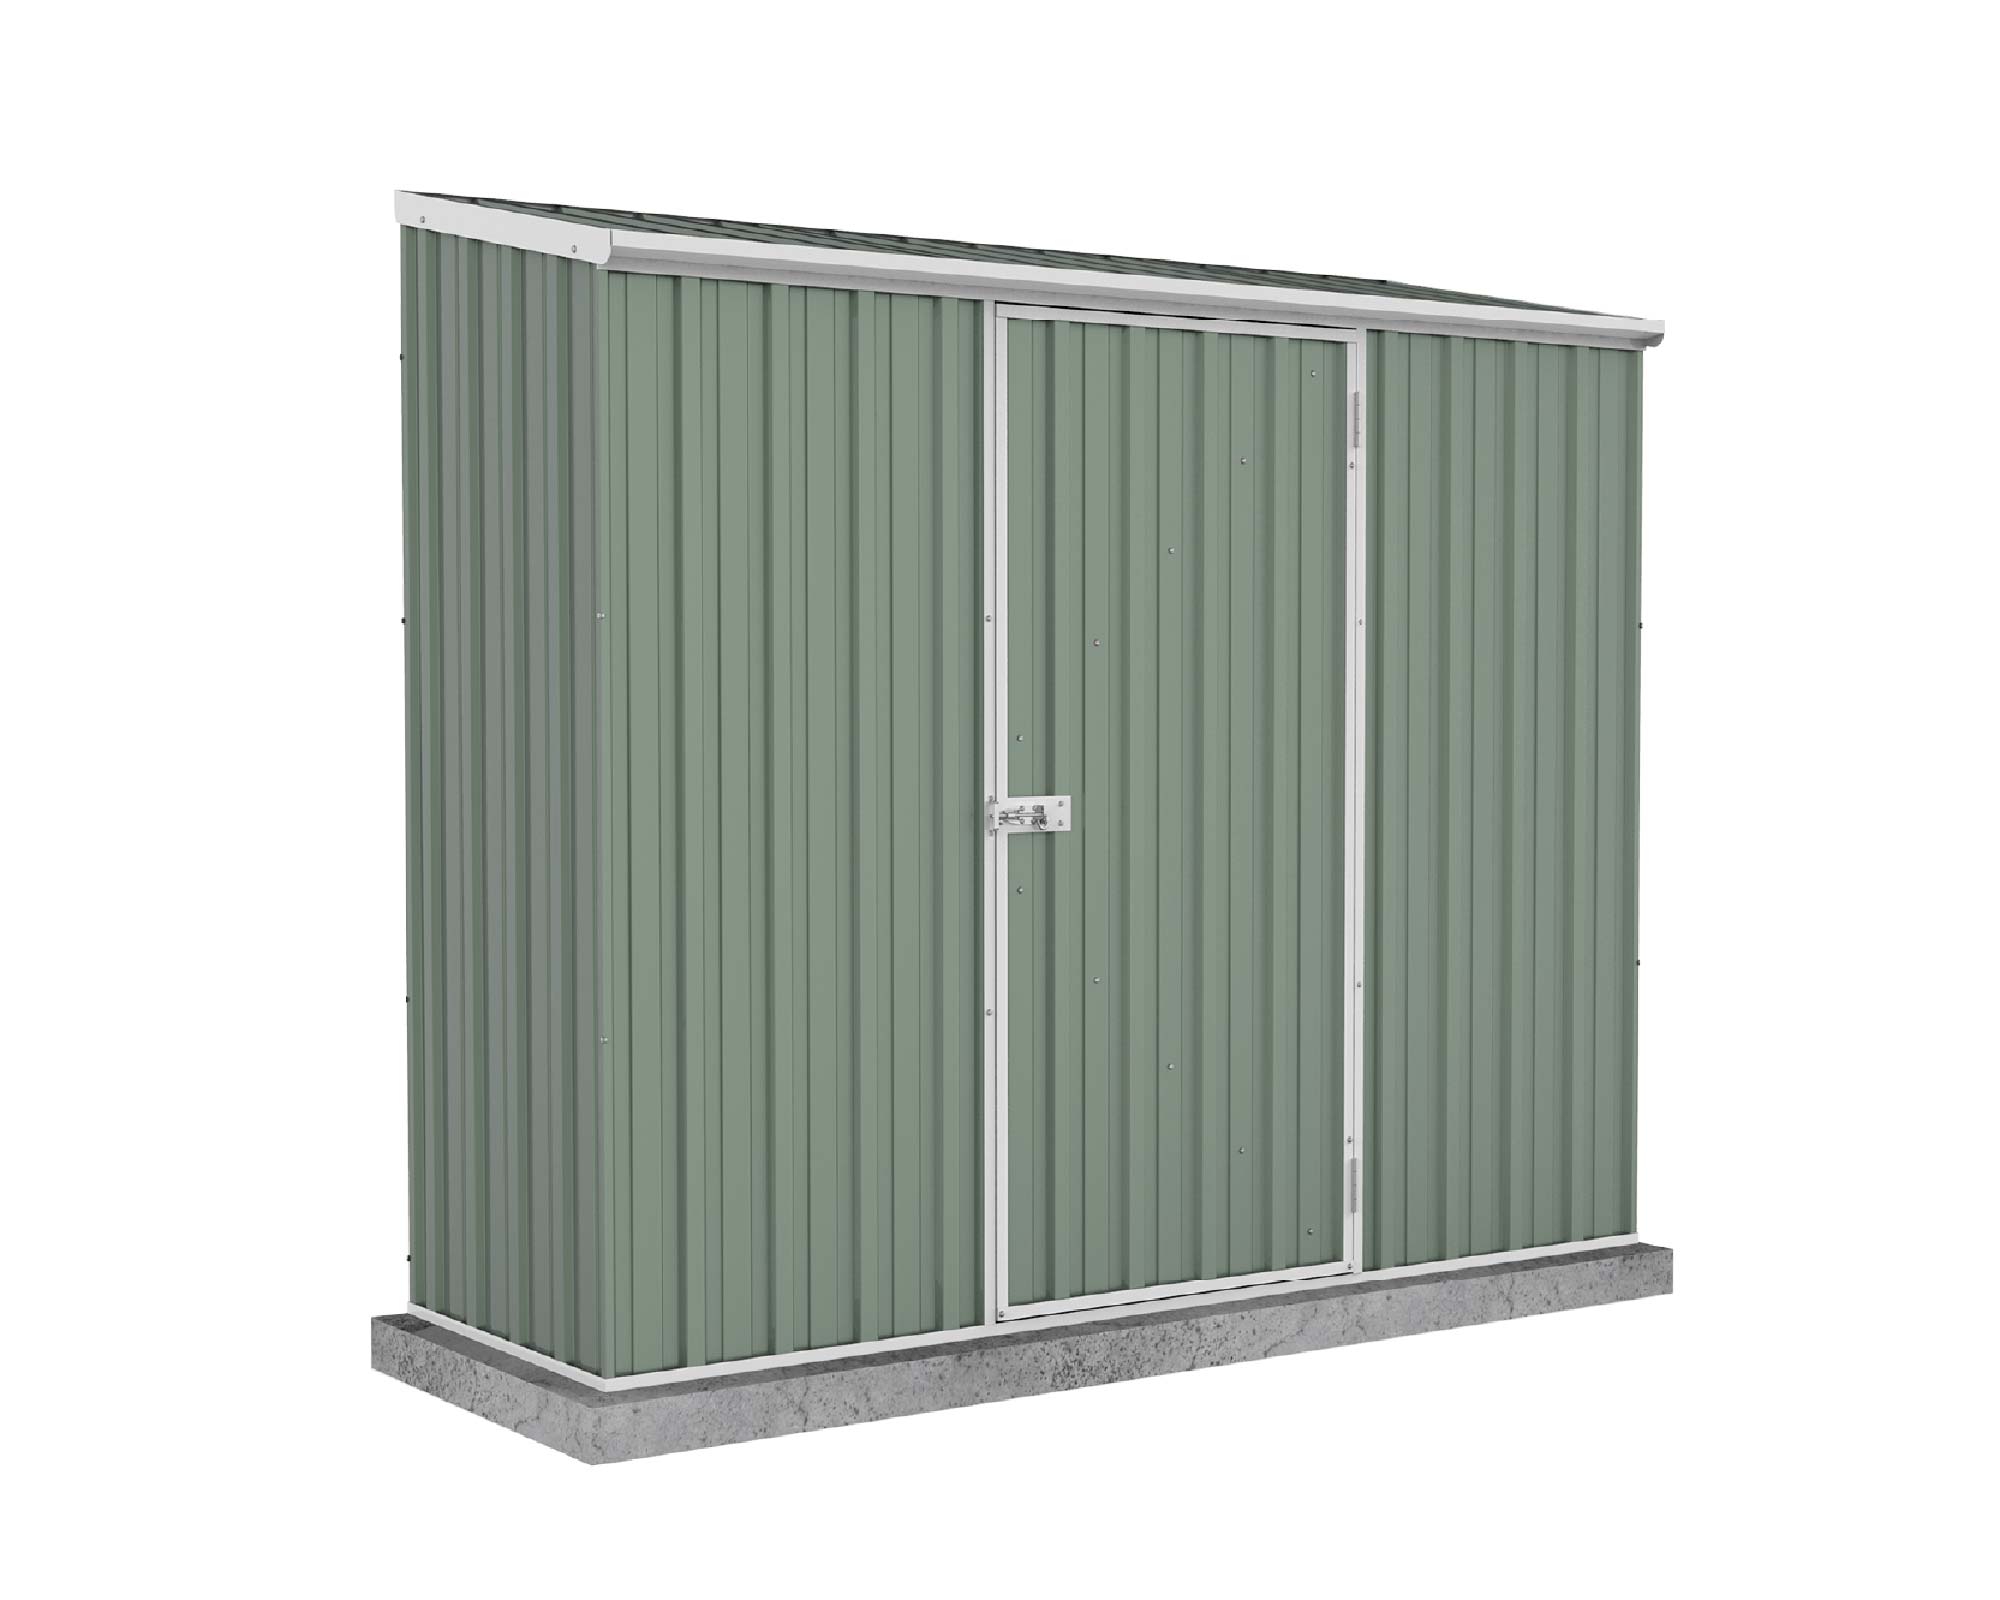 Space Saver Garden Shed Single Door - 2.26 x 0.78 x 1.95m - ABSCO in Pale Eucalypt